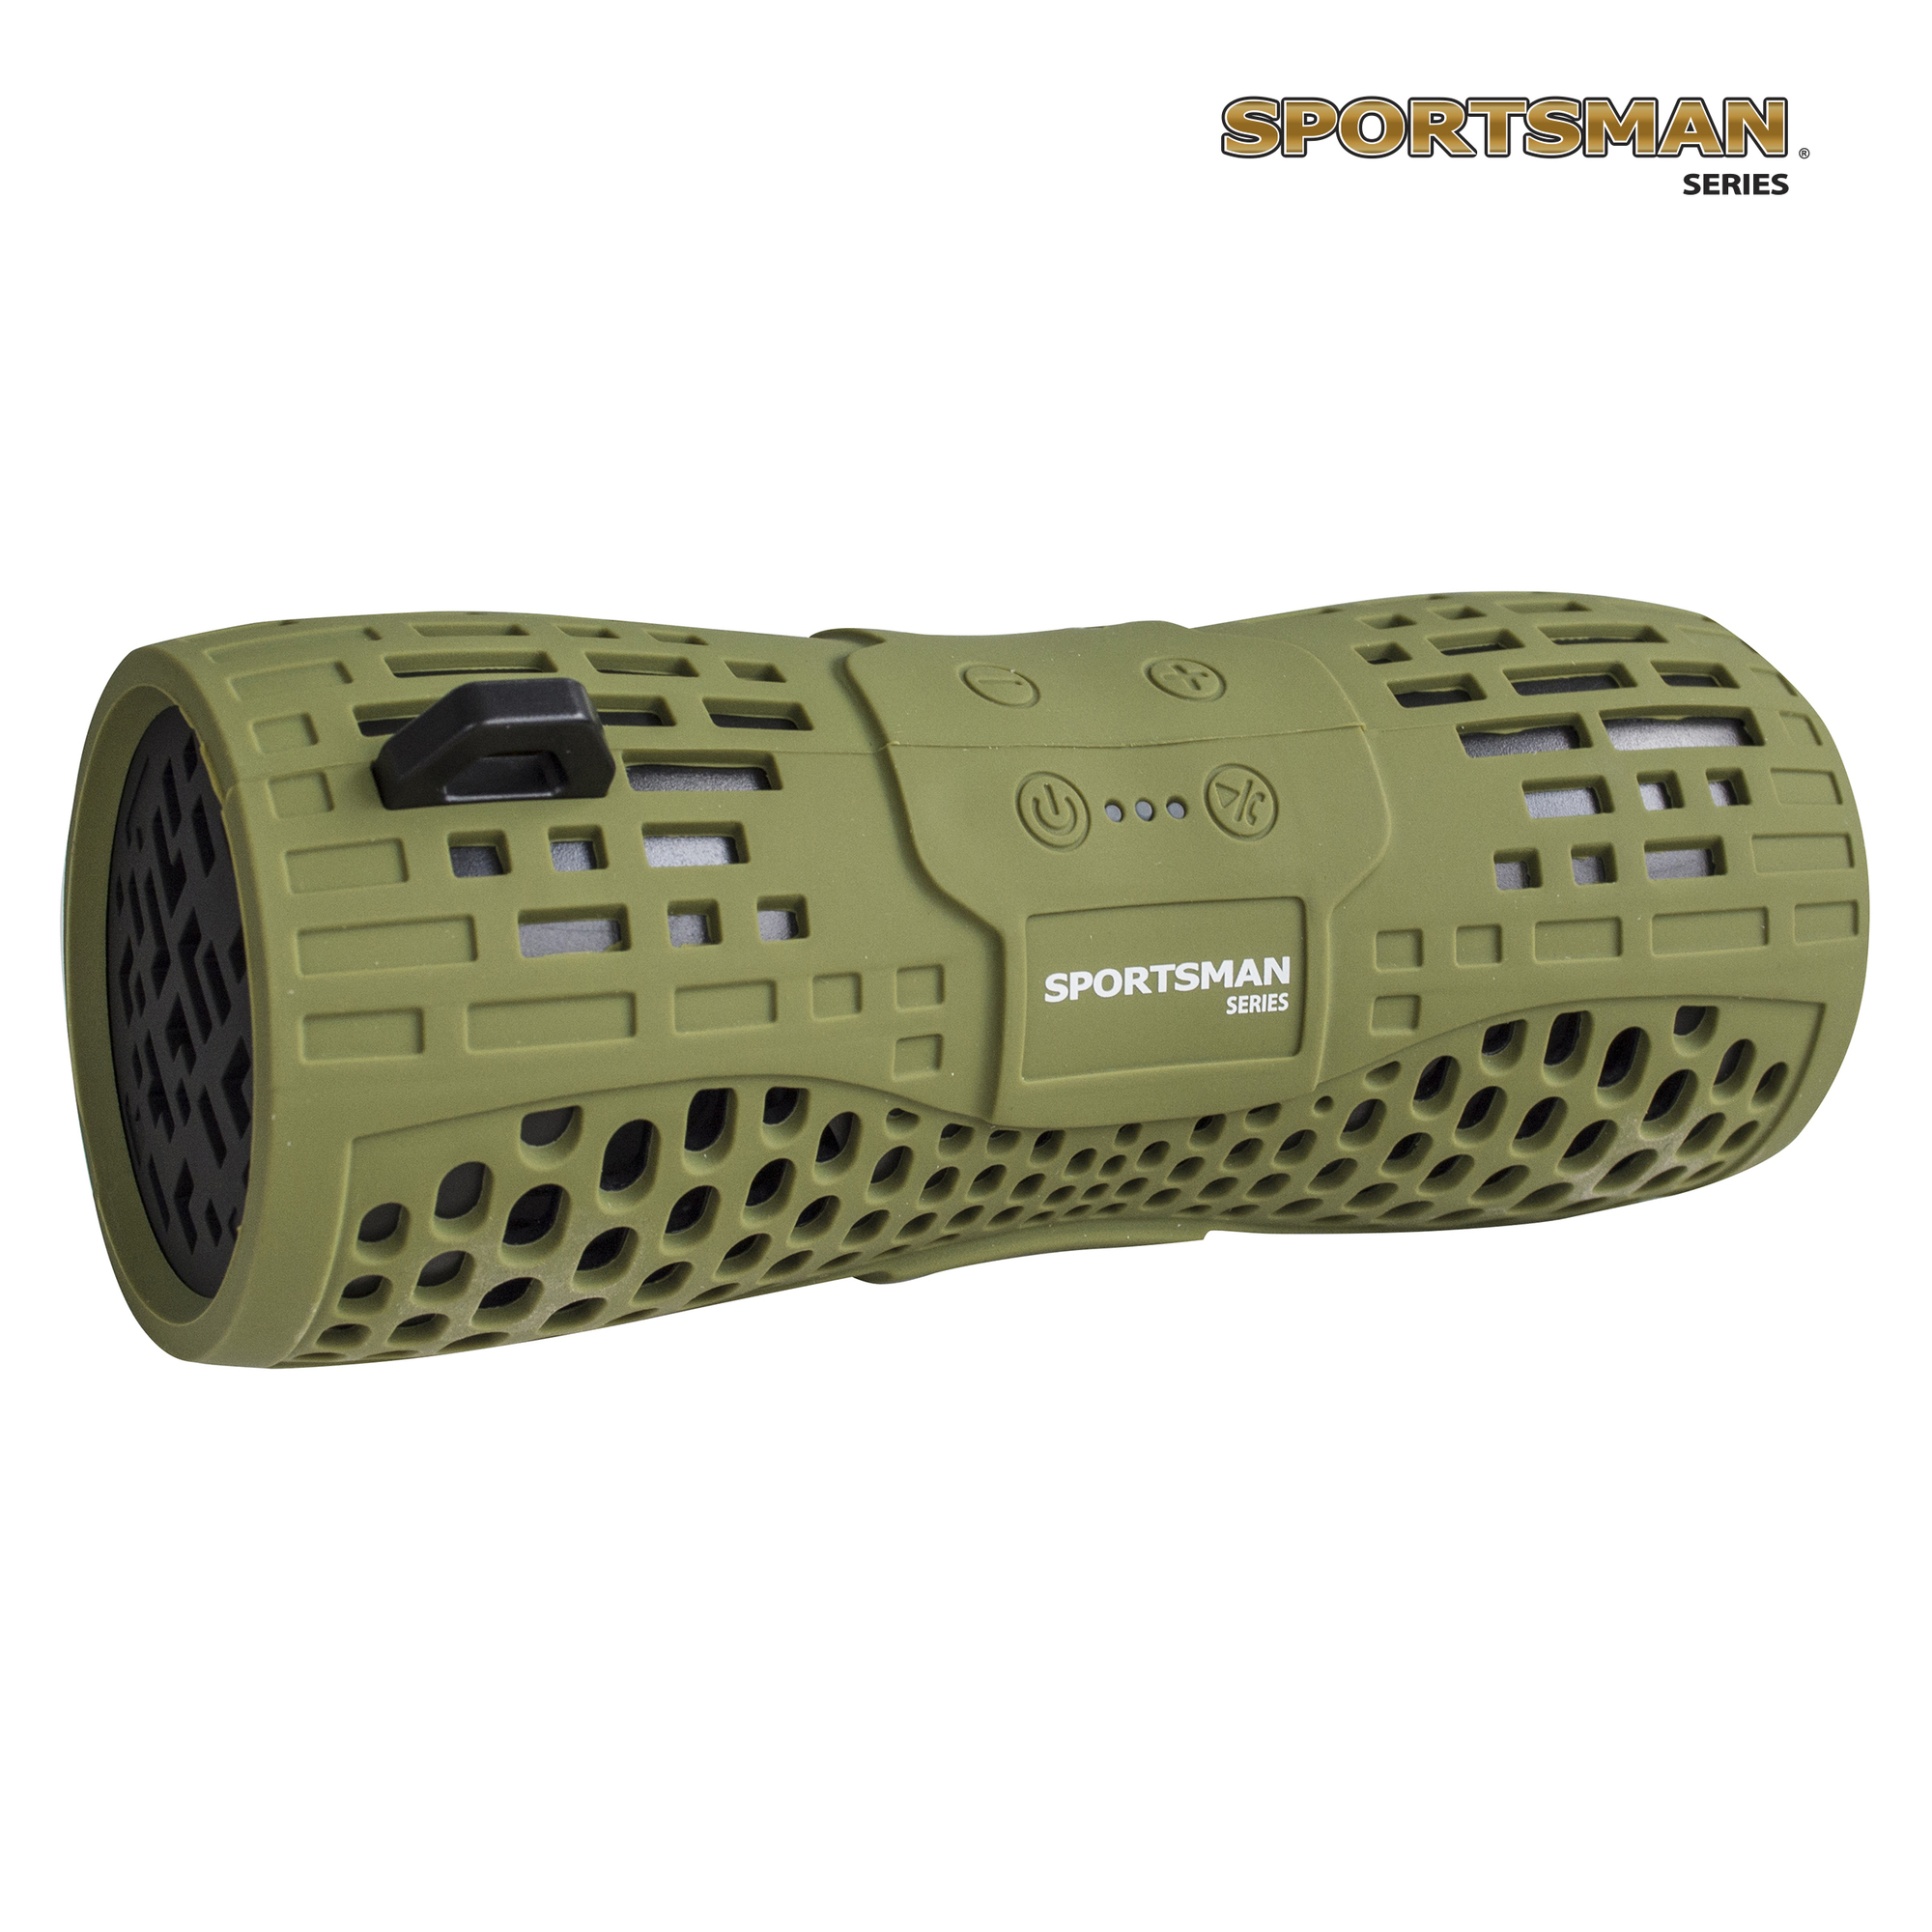 Sportsman Series, Water Resistant Wireless Speaker, Model SPEAKERH20